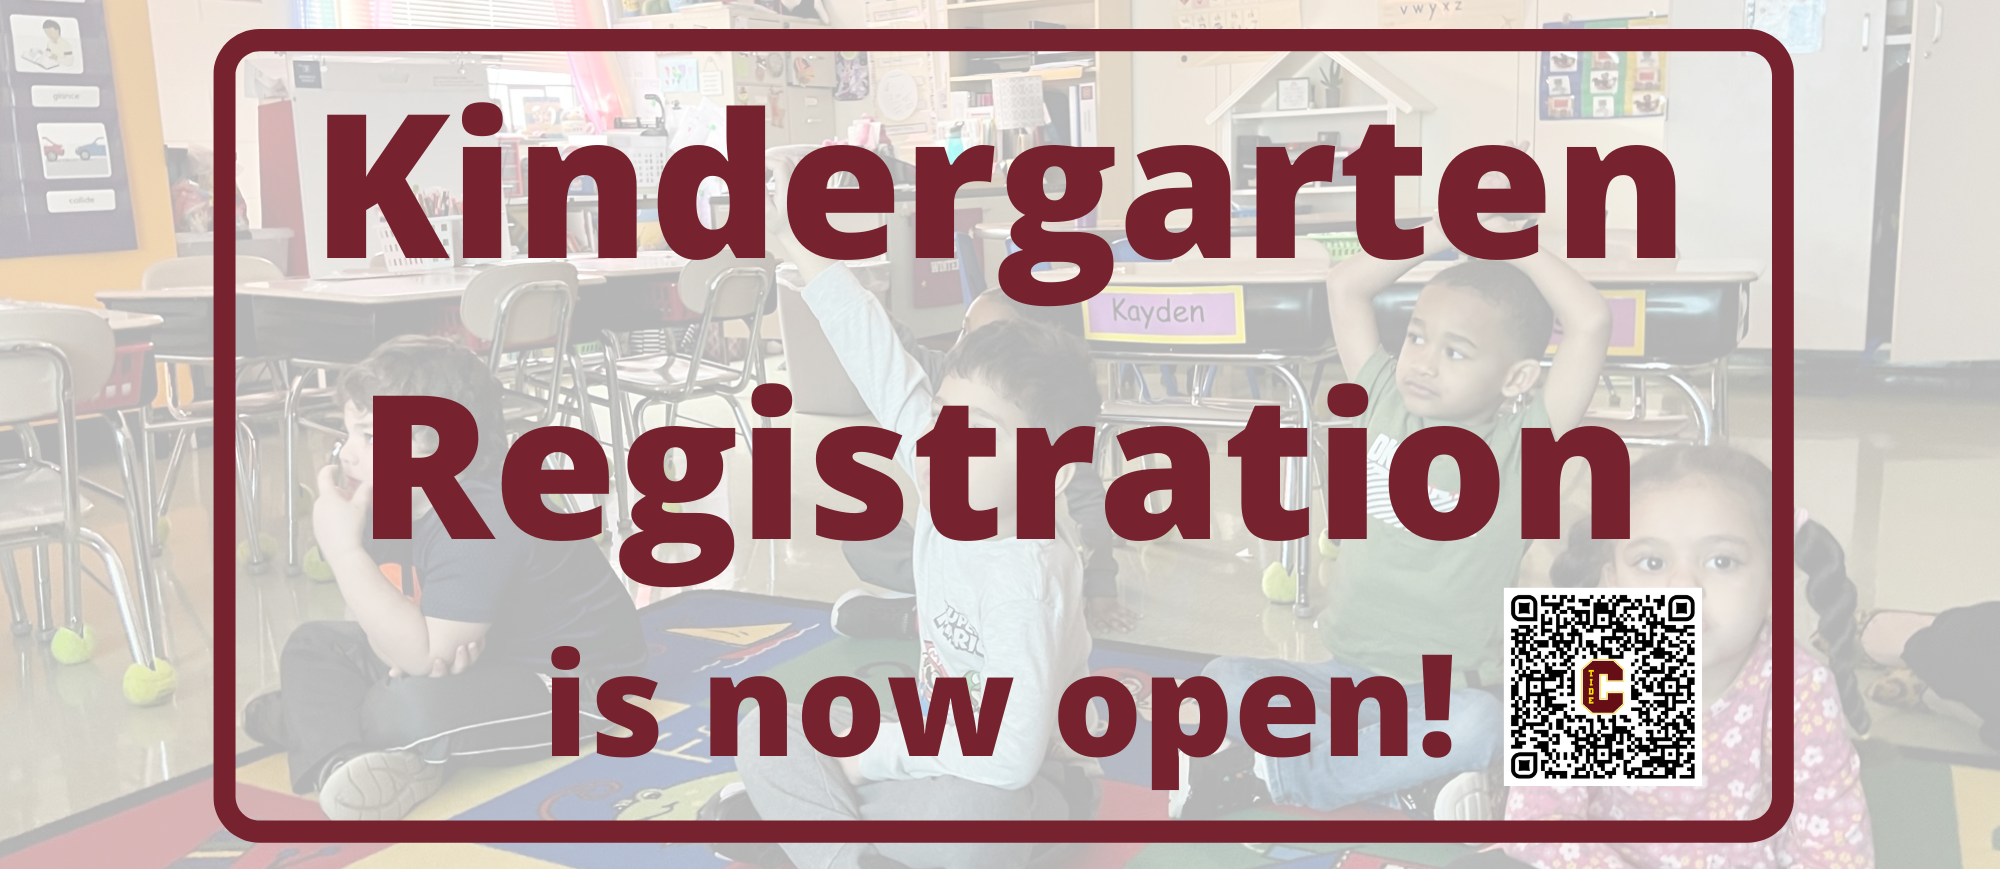 Kindergarten Registration is now open with pic of kindergarten student in the background and qr code 